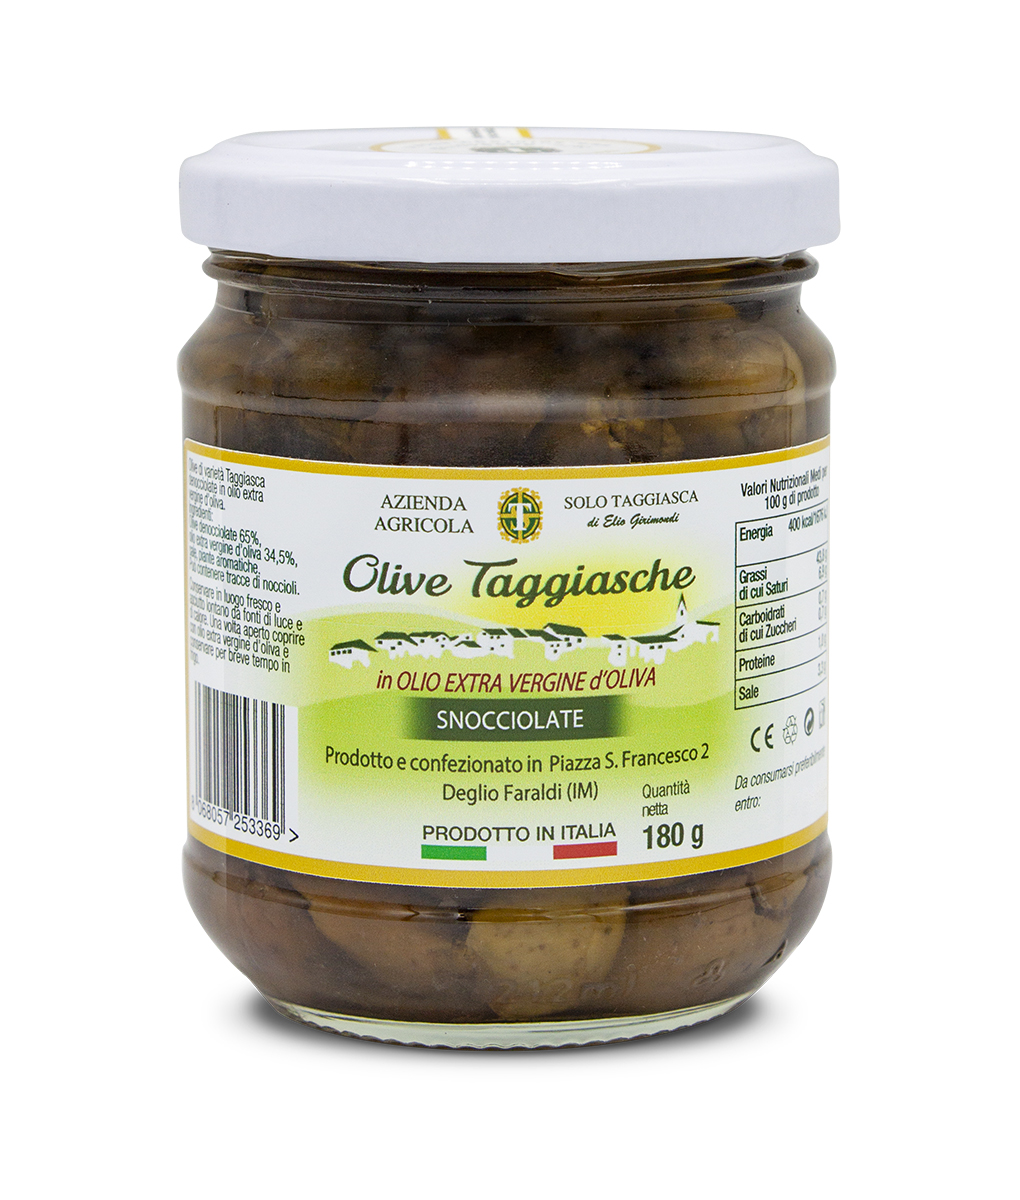 Pitted Taggiasche olives in Evo Jar 212 ml